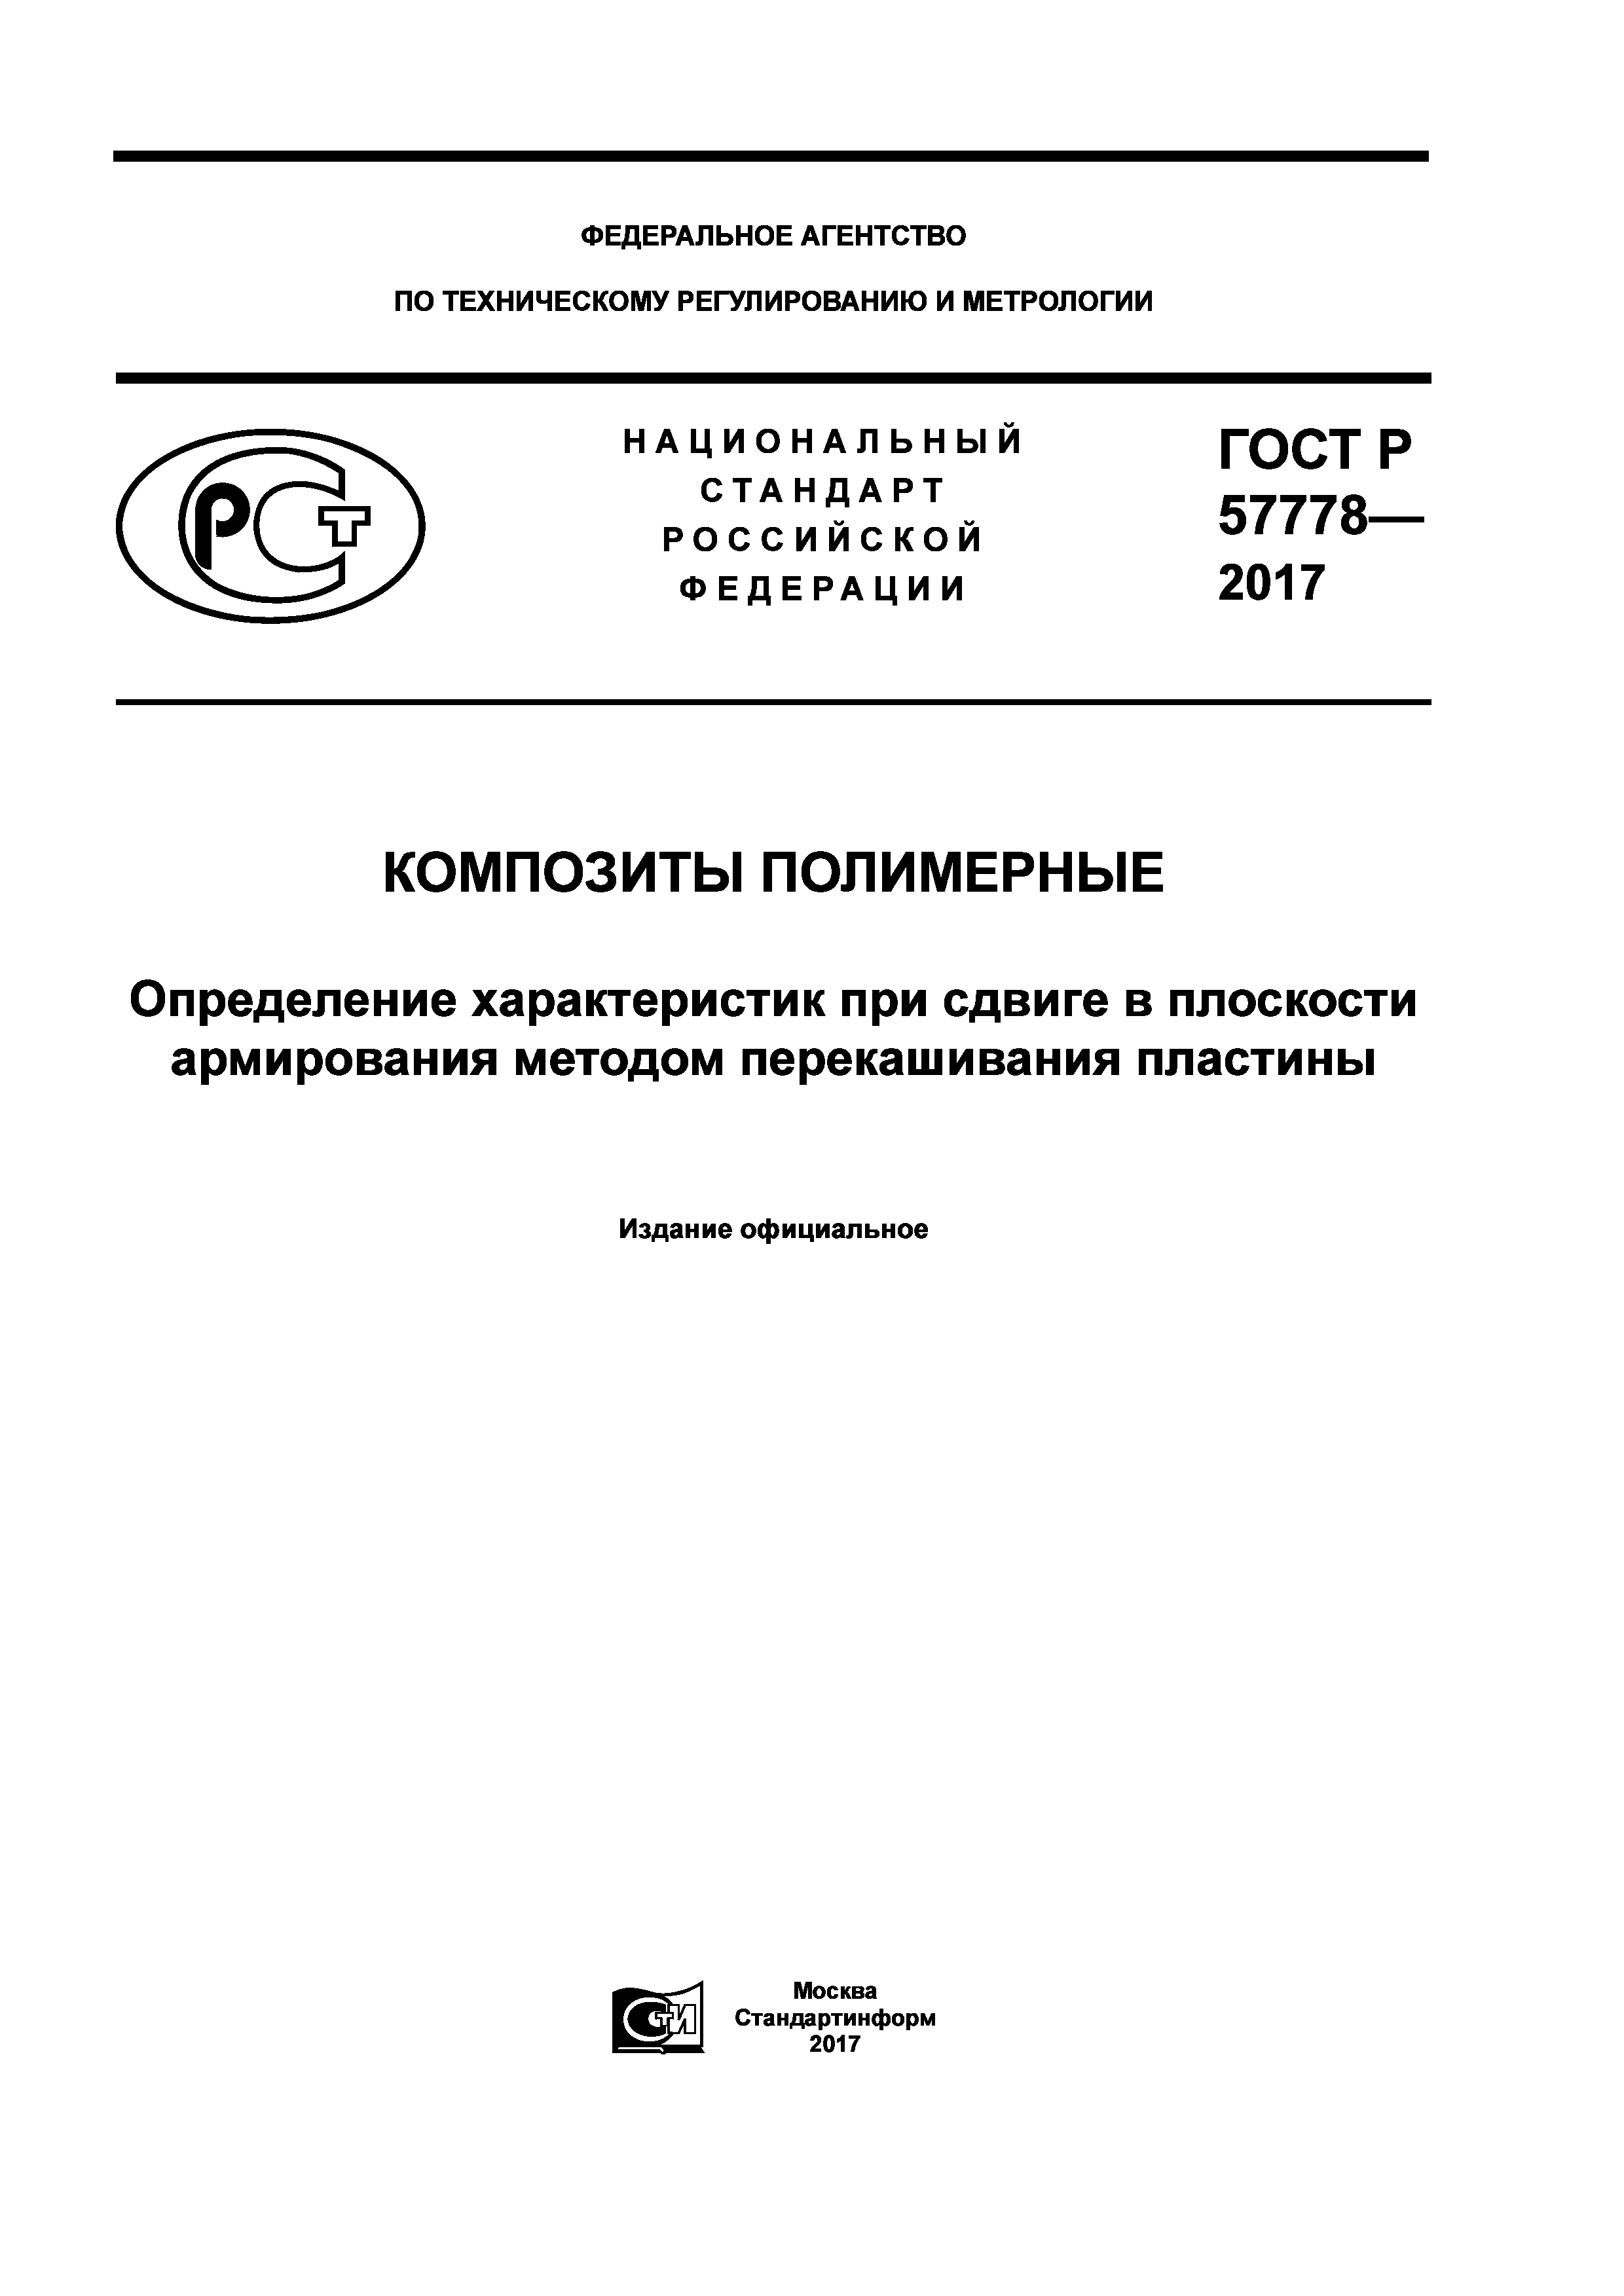 ГОСТ Р 57778-2017